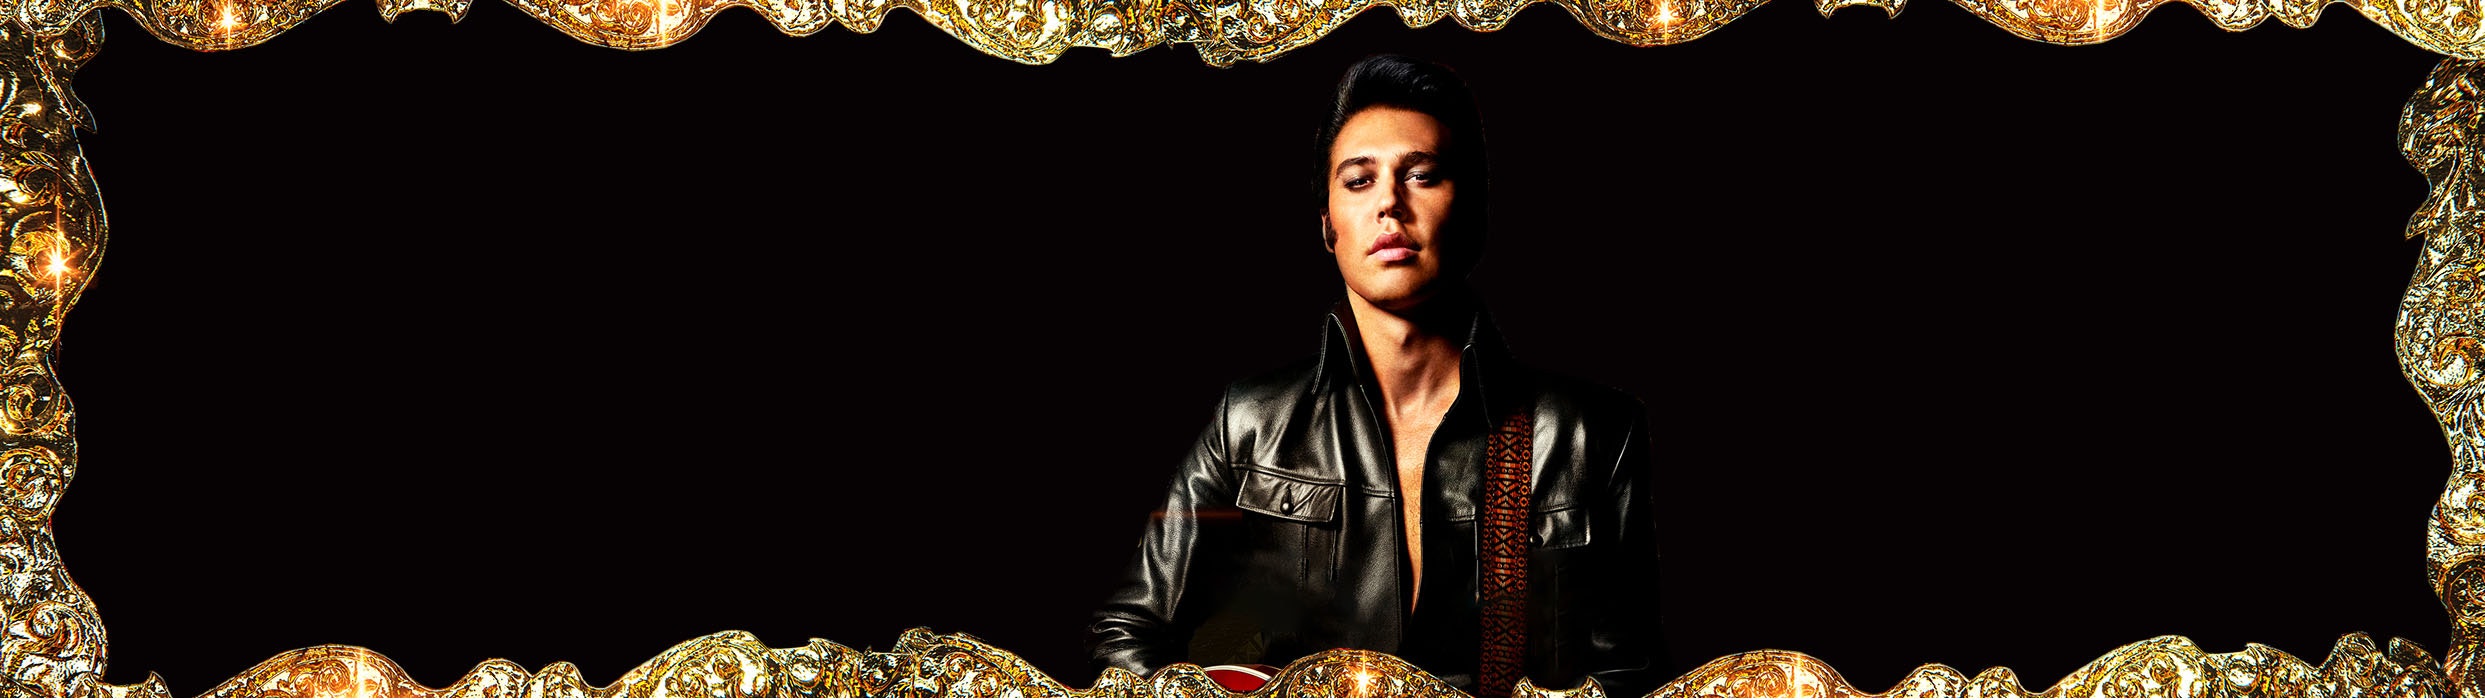 Elvis - background image